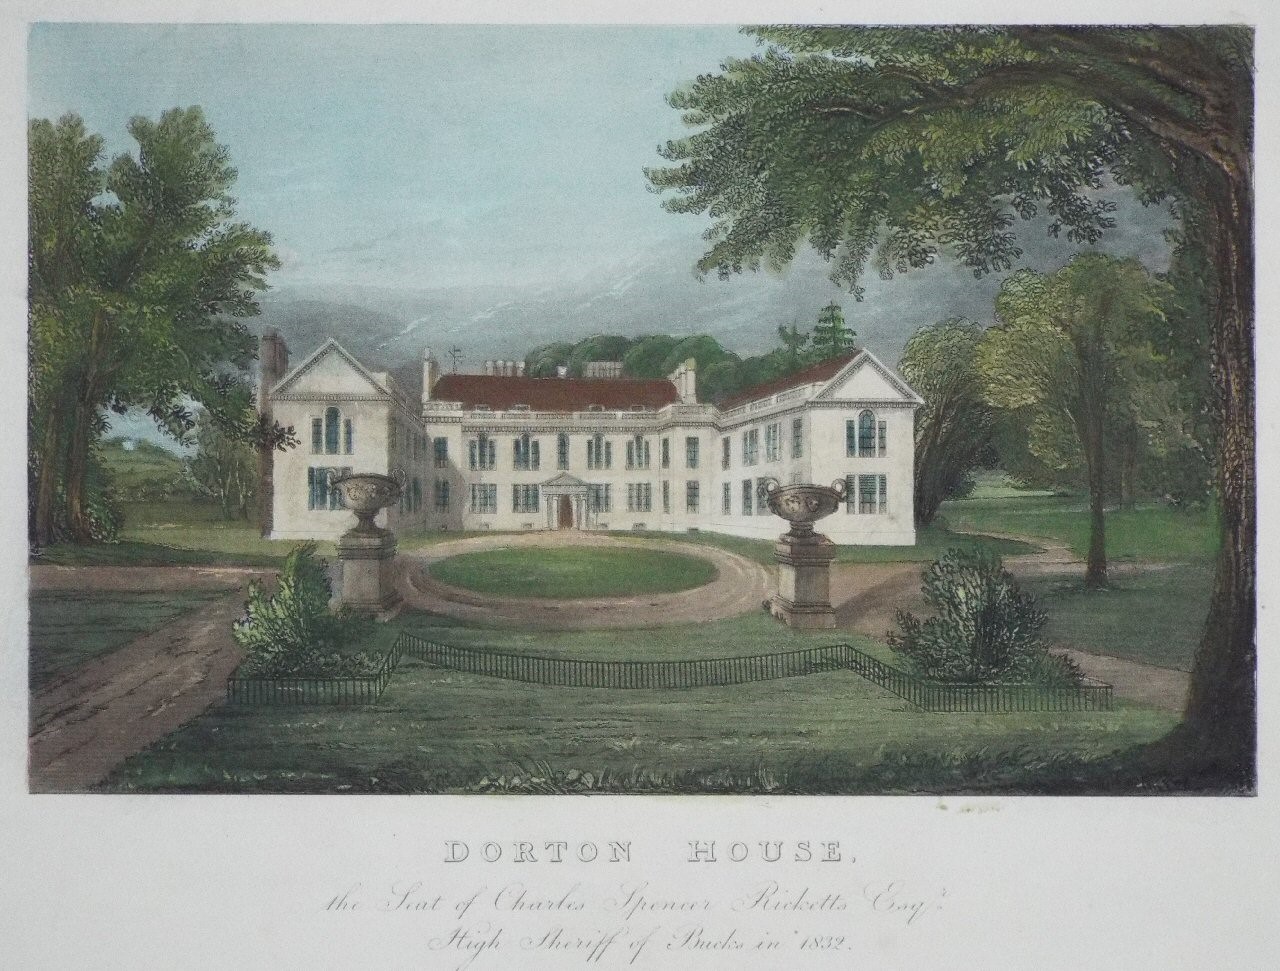 Aquatint - Dorton House, the Seat of Charles Spencer Ricketts Esqr. High Sheriff of Bucks in 1832.